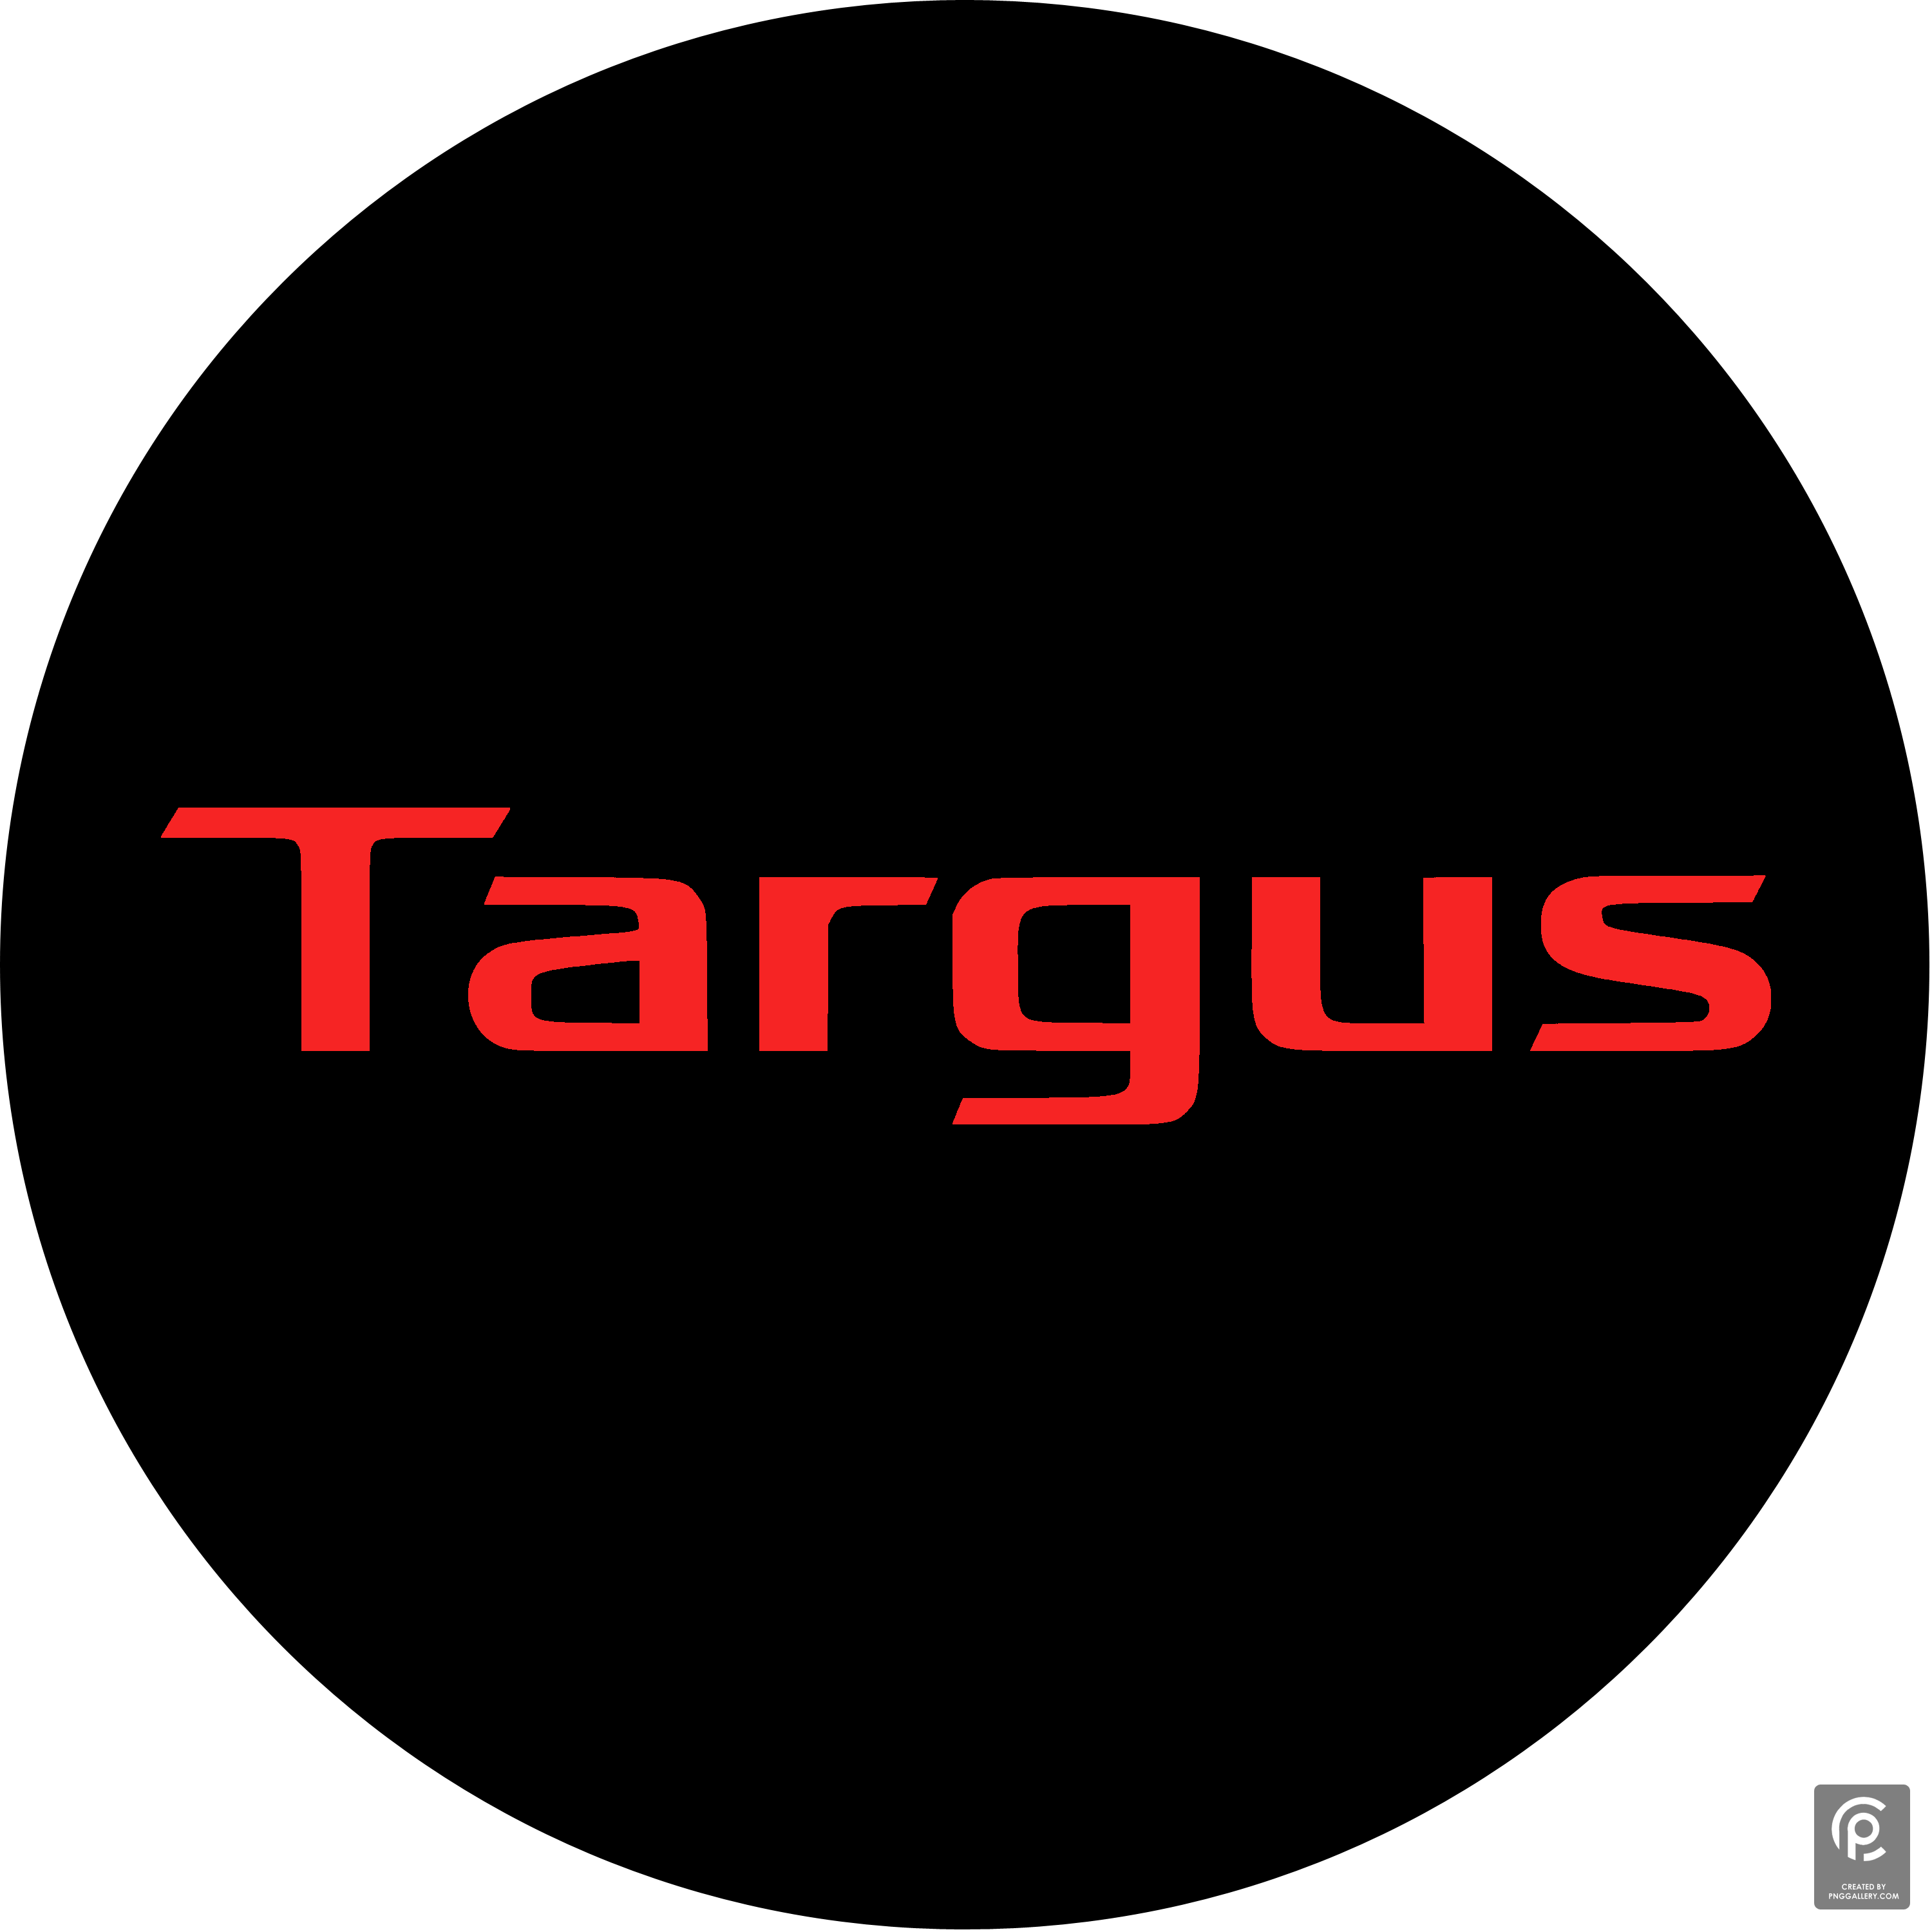 Targus Logo Transparent Clipart